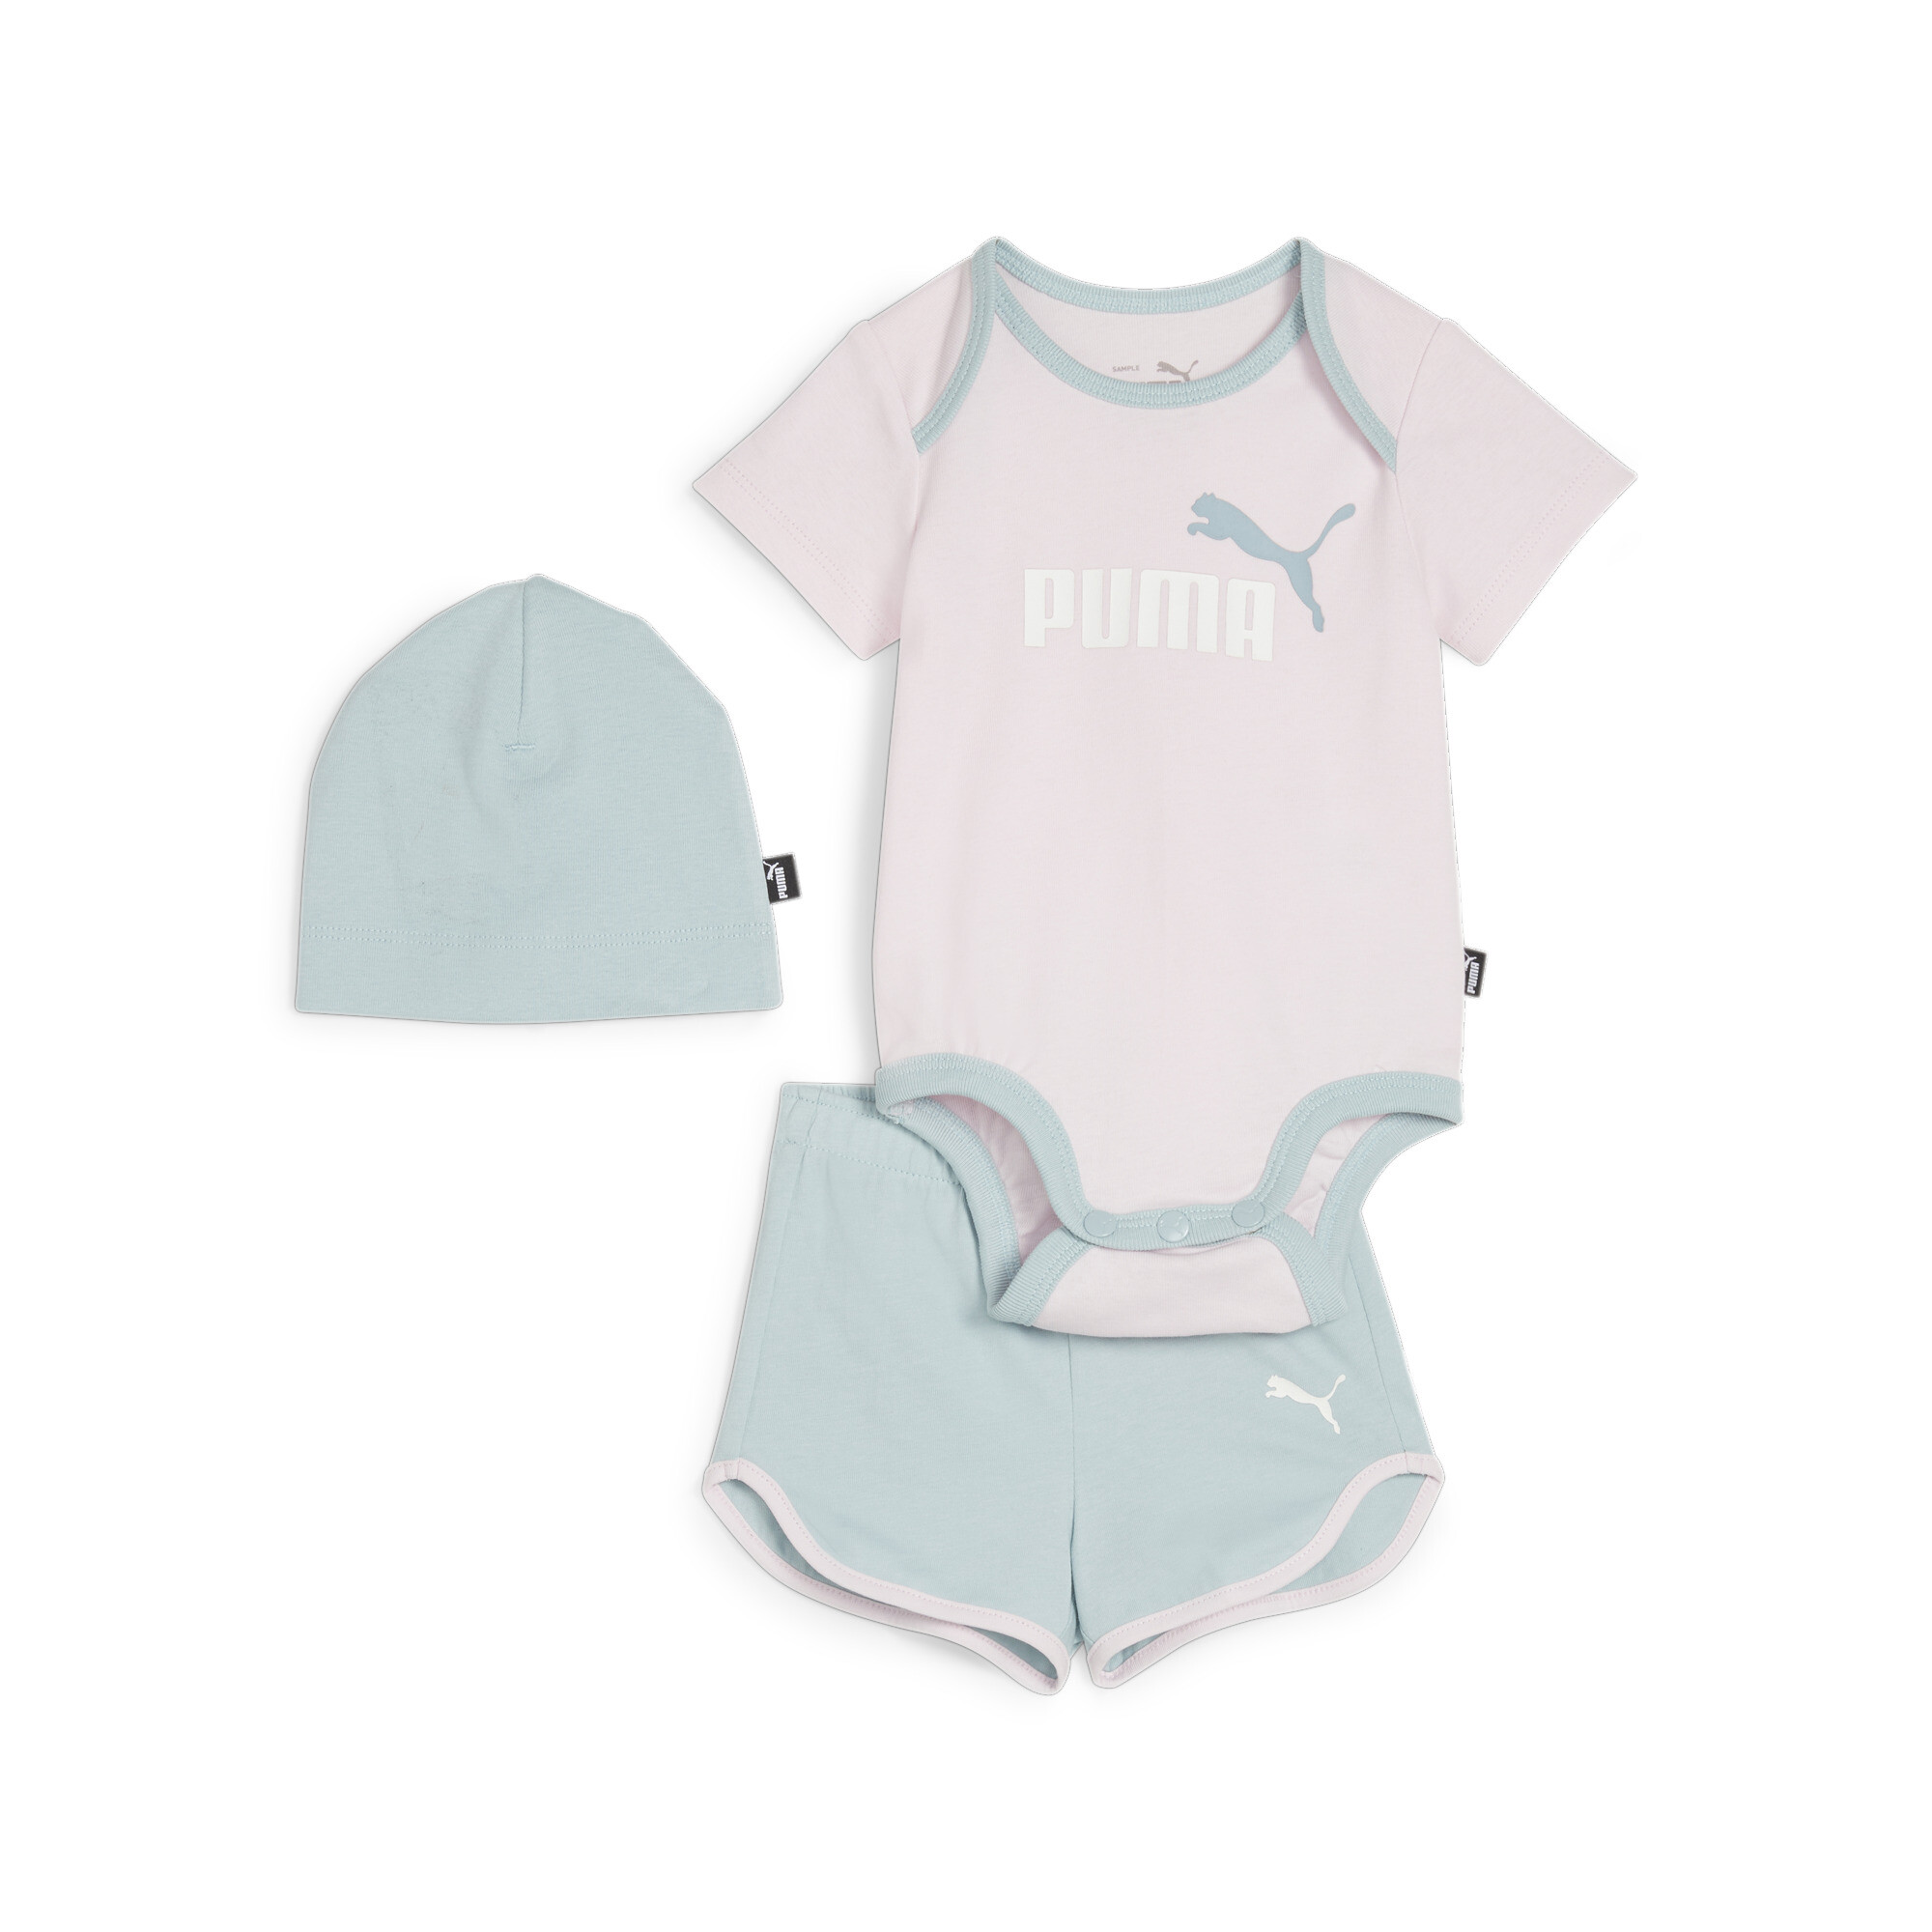 Puma Minicats Beanie Hat Newborn Set Baby, Pink, Size 9-12M, Clothing